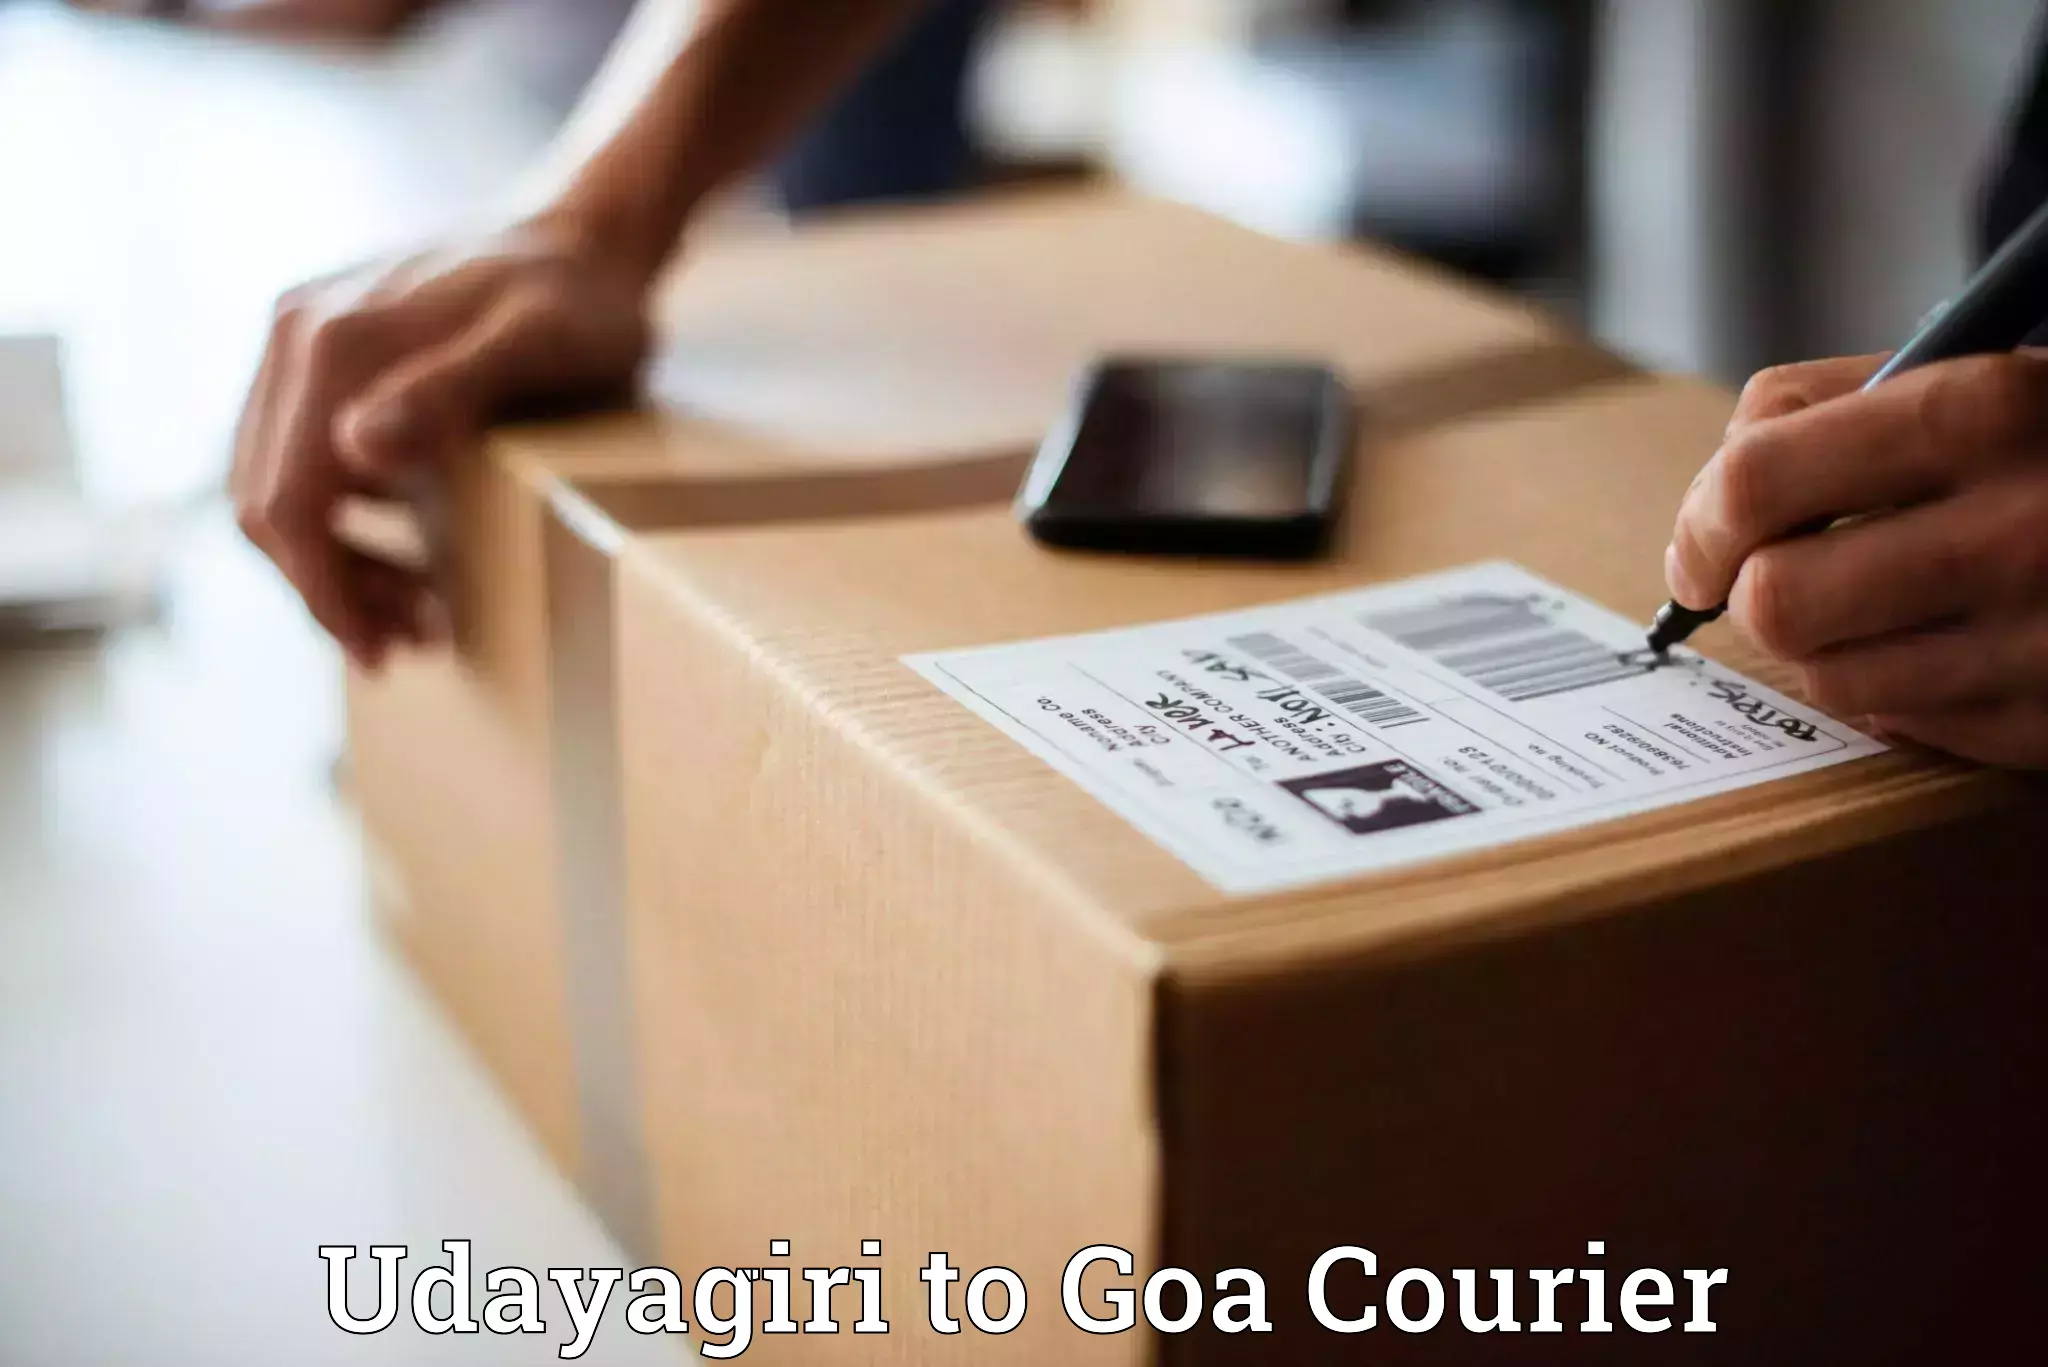 Courier service partnerships in Udayagiri to Goa